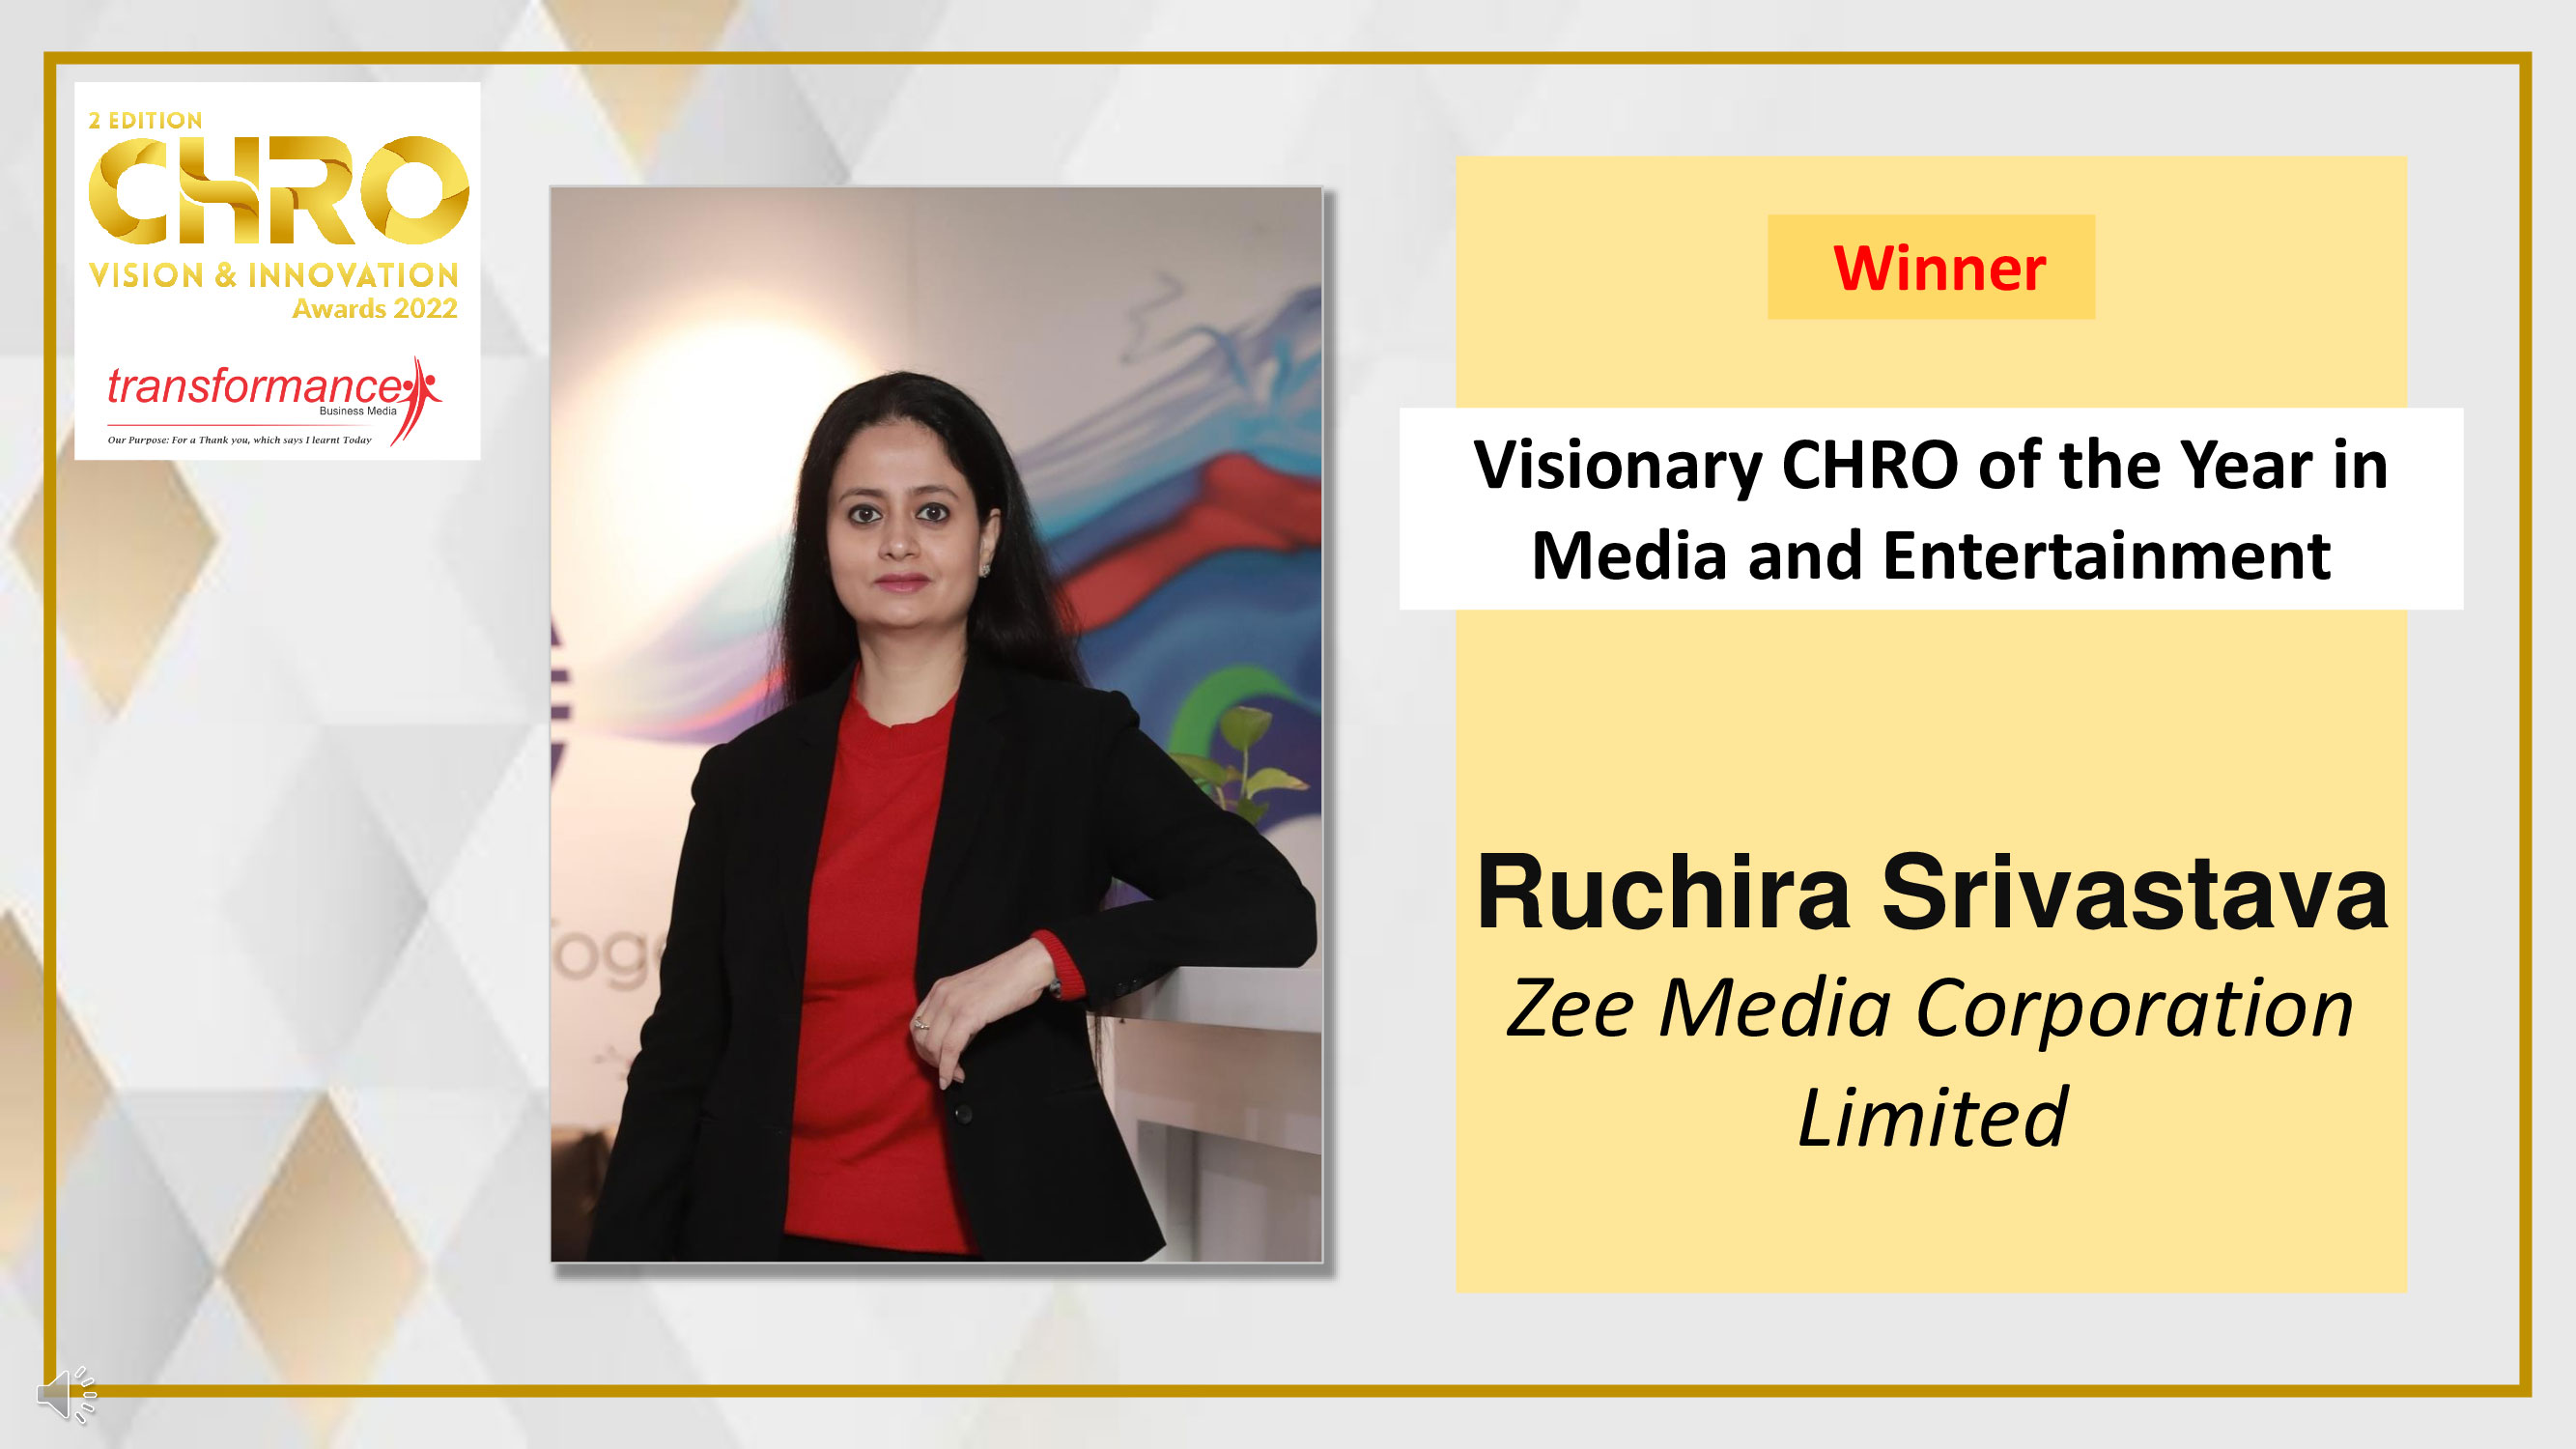 Ruchira Srivastava, Zee Media Corporation Limited